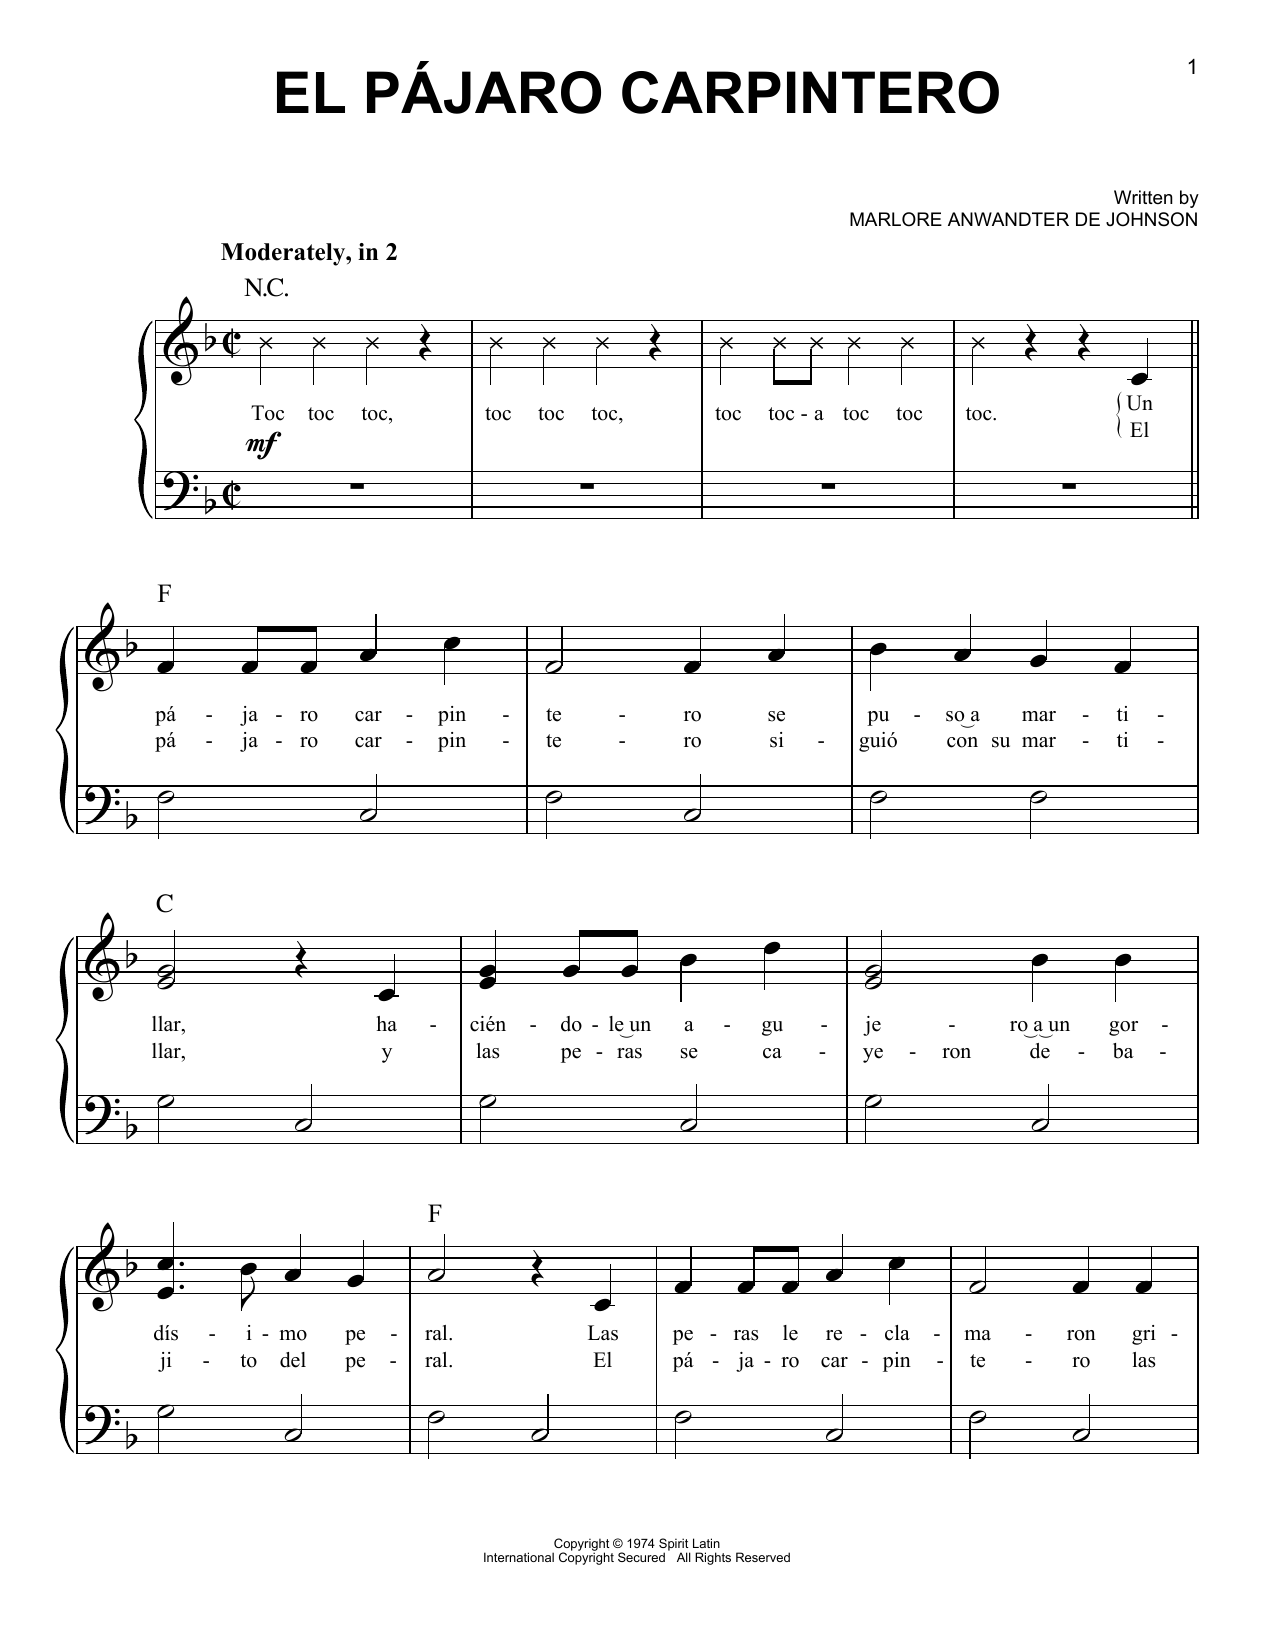 Download Marlore Anwandter de Johnson El Pajaro Carpintero Sheet Music and learn how to play Easy Piano PDF digital score in minutes